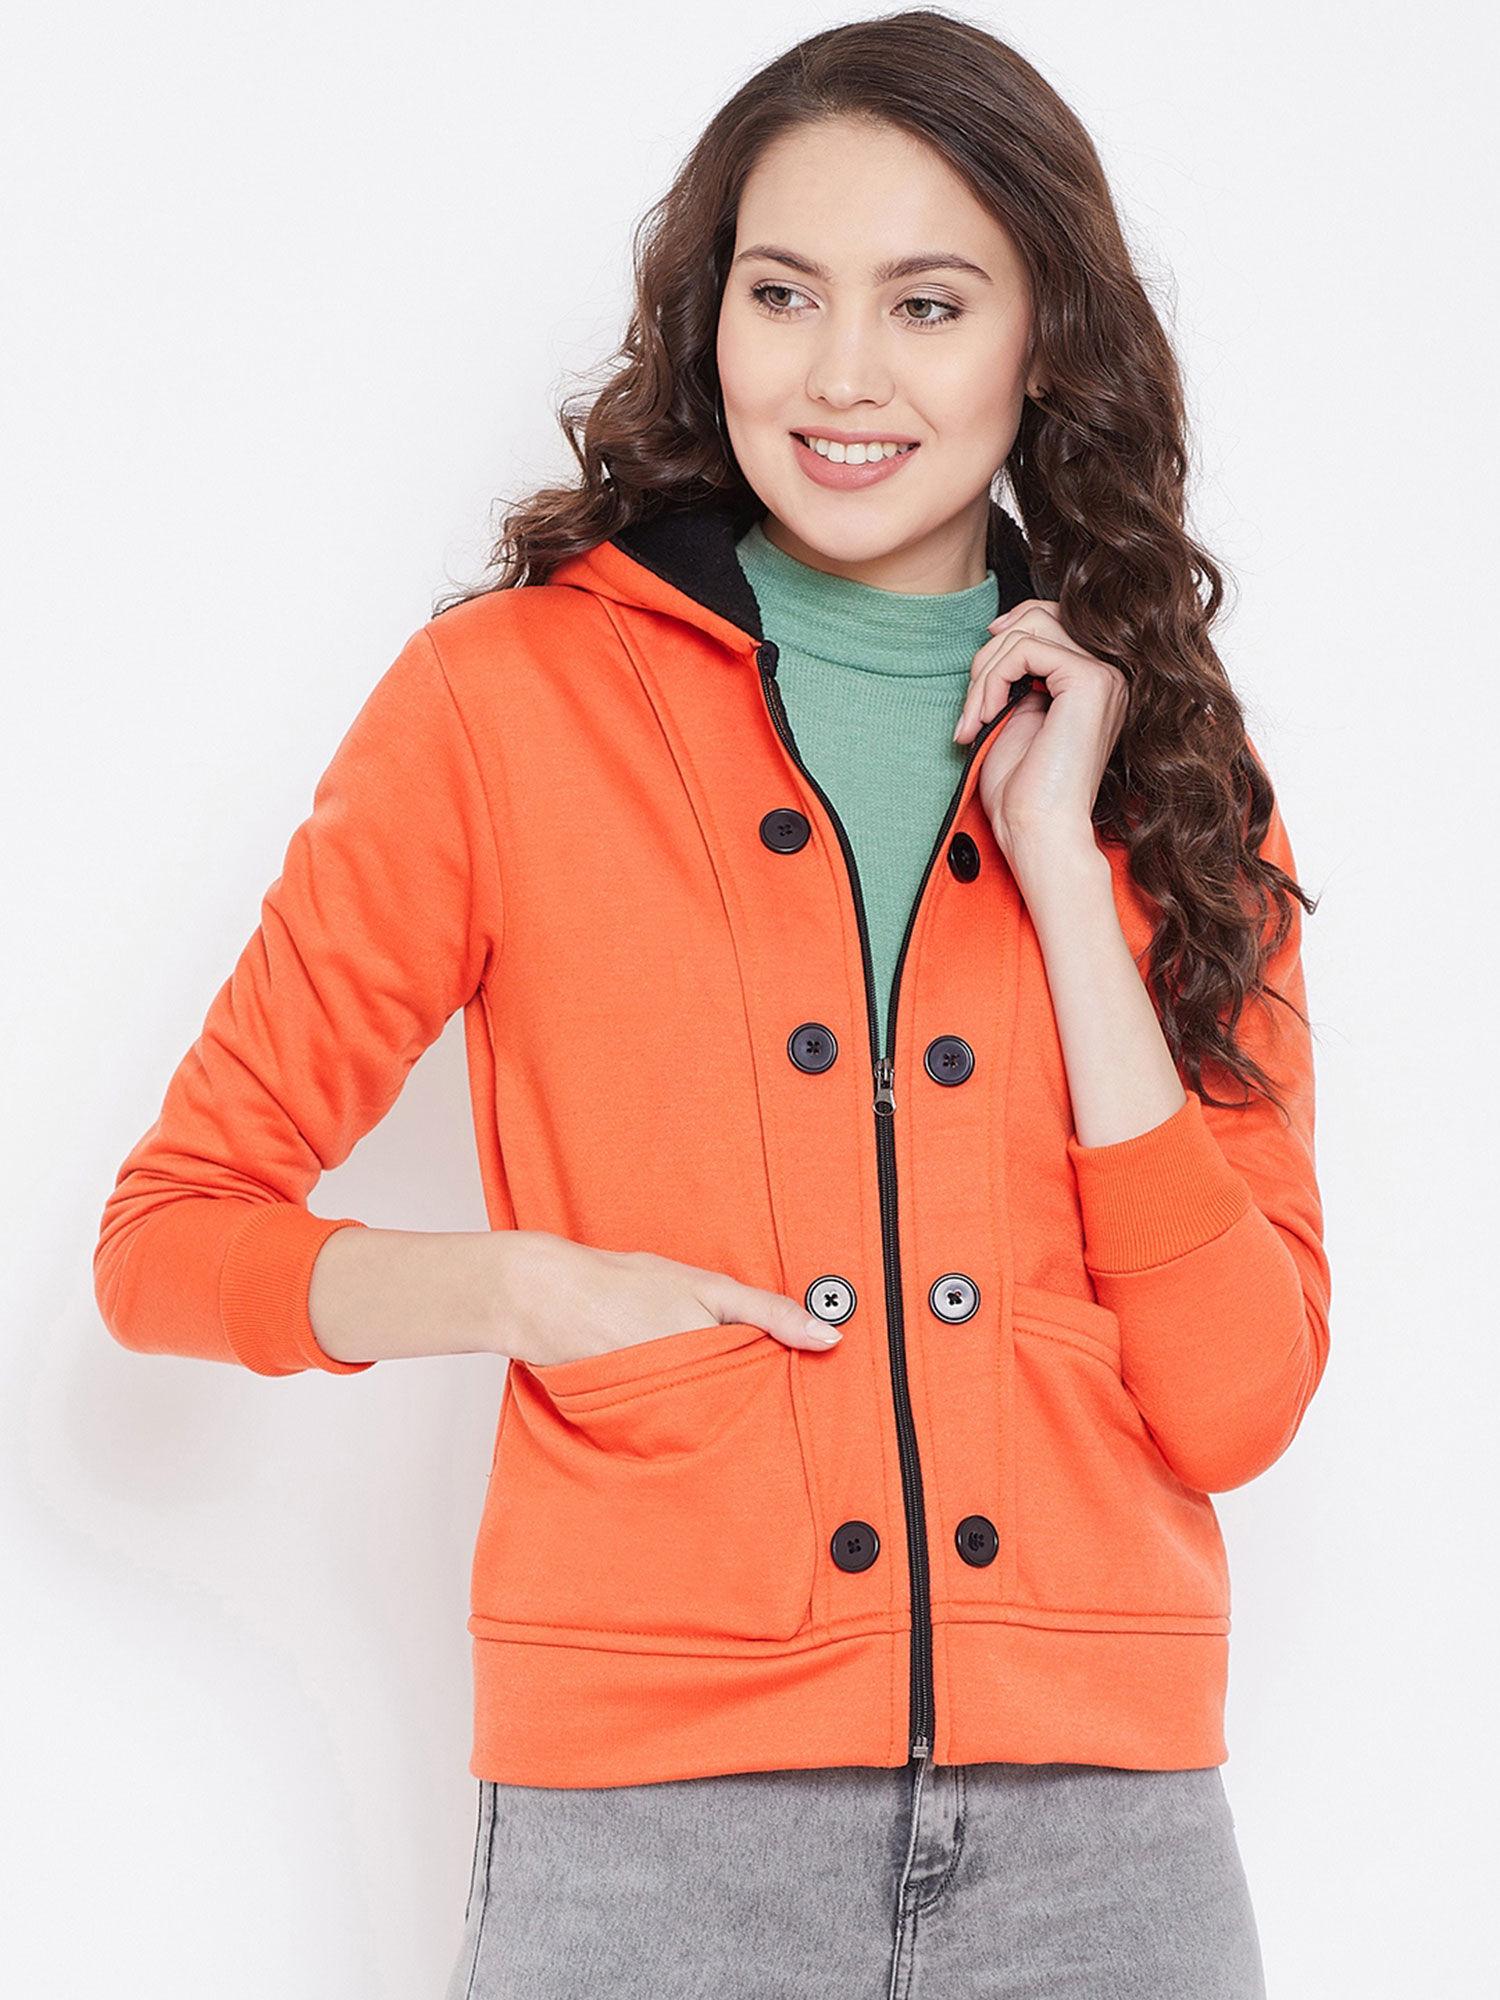 orange solid jacket